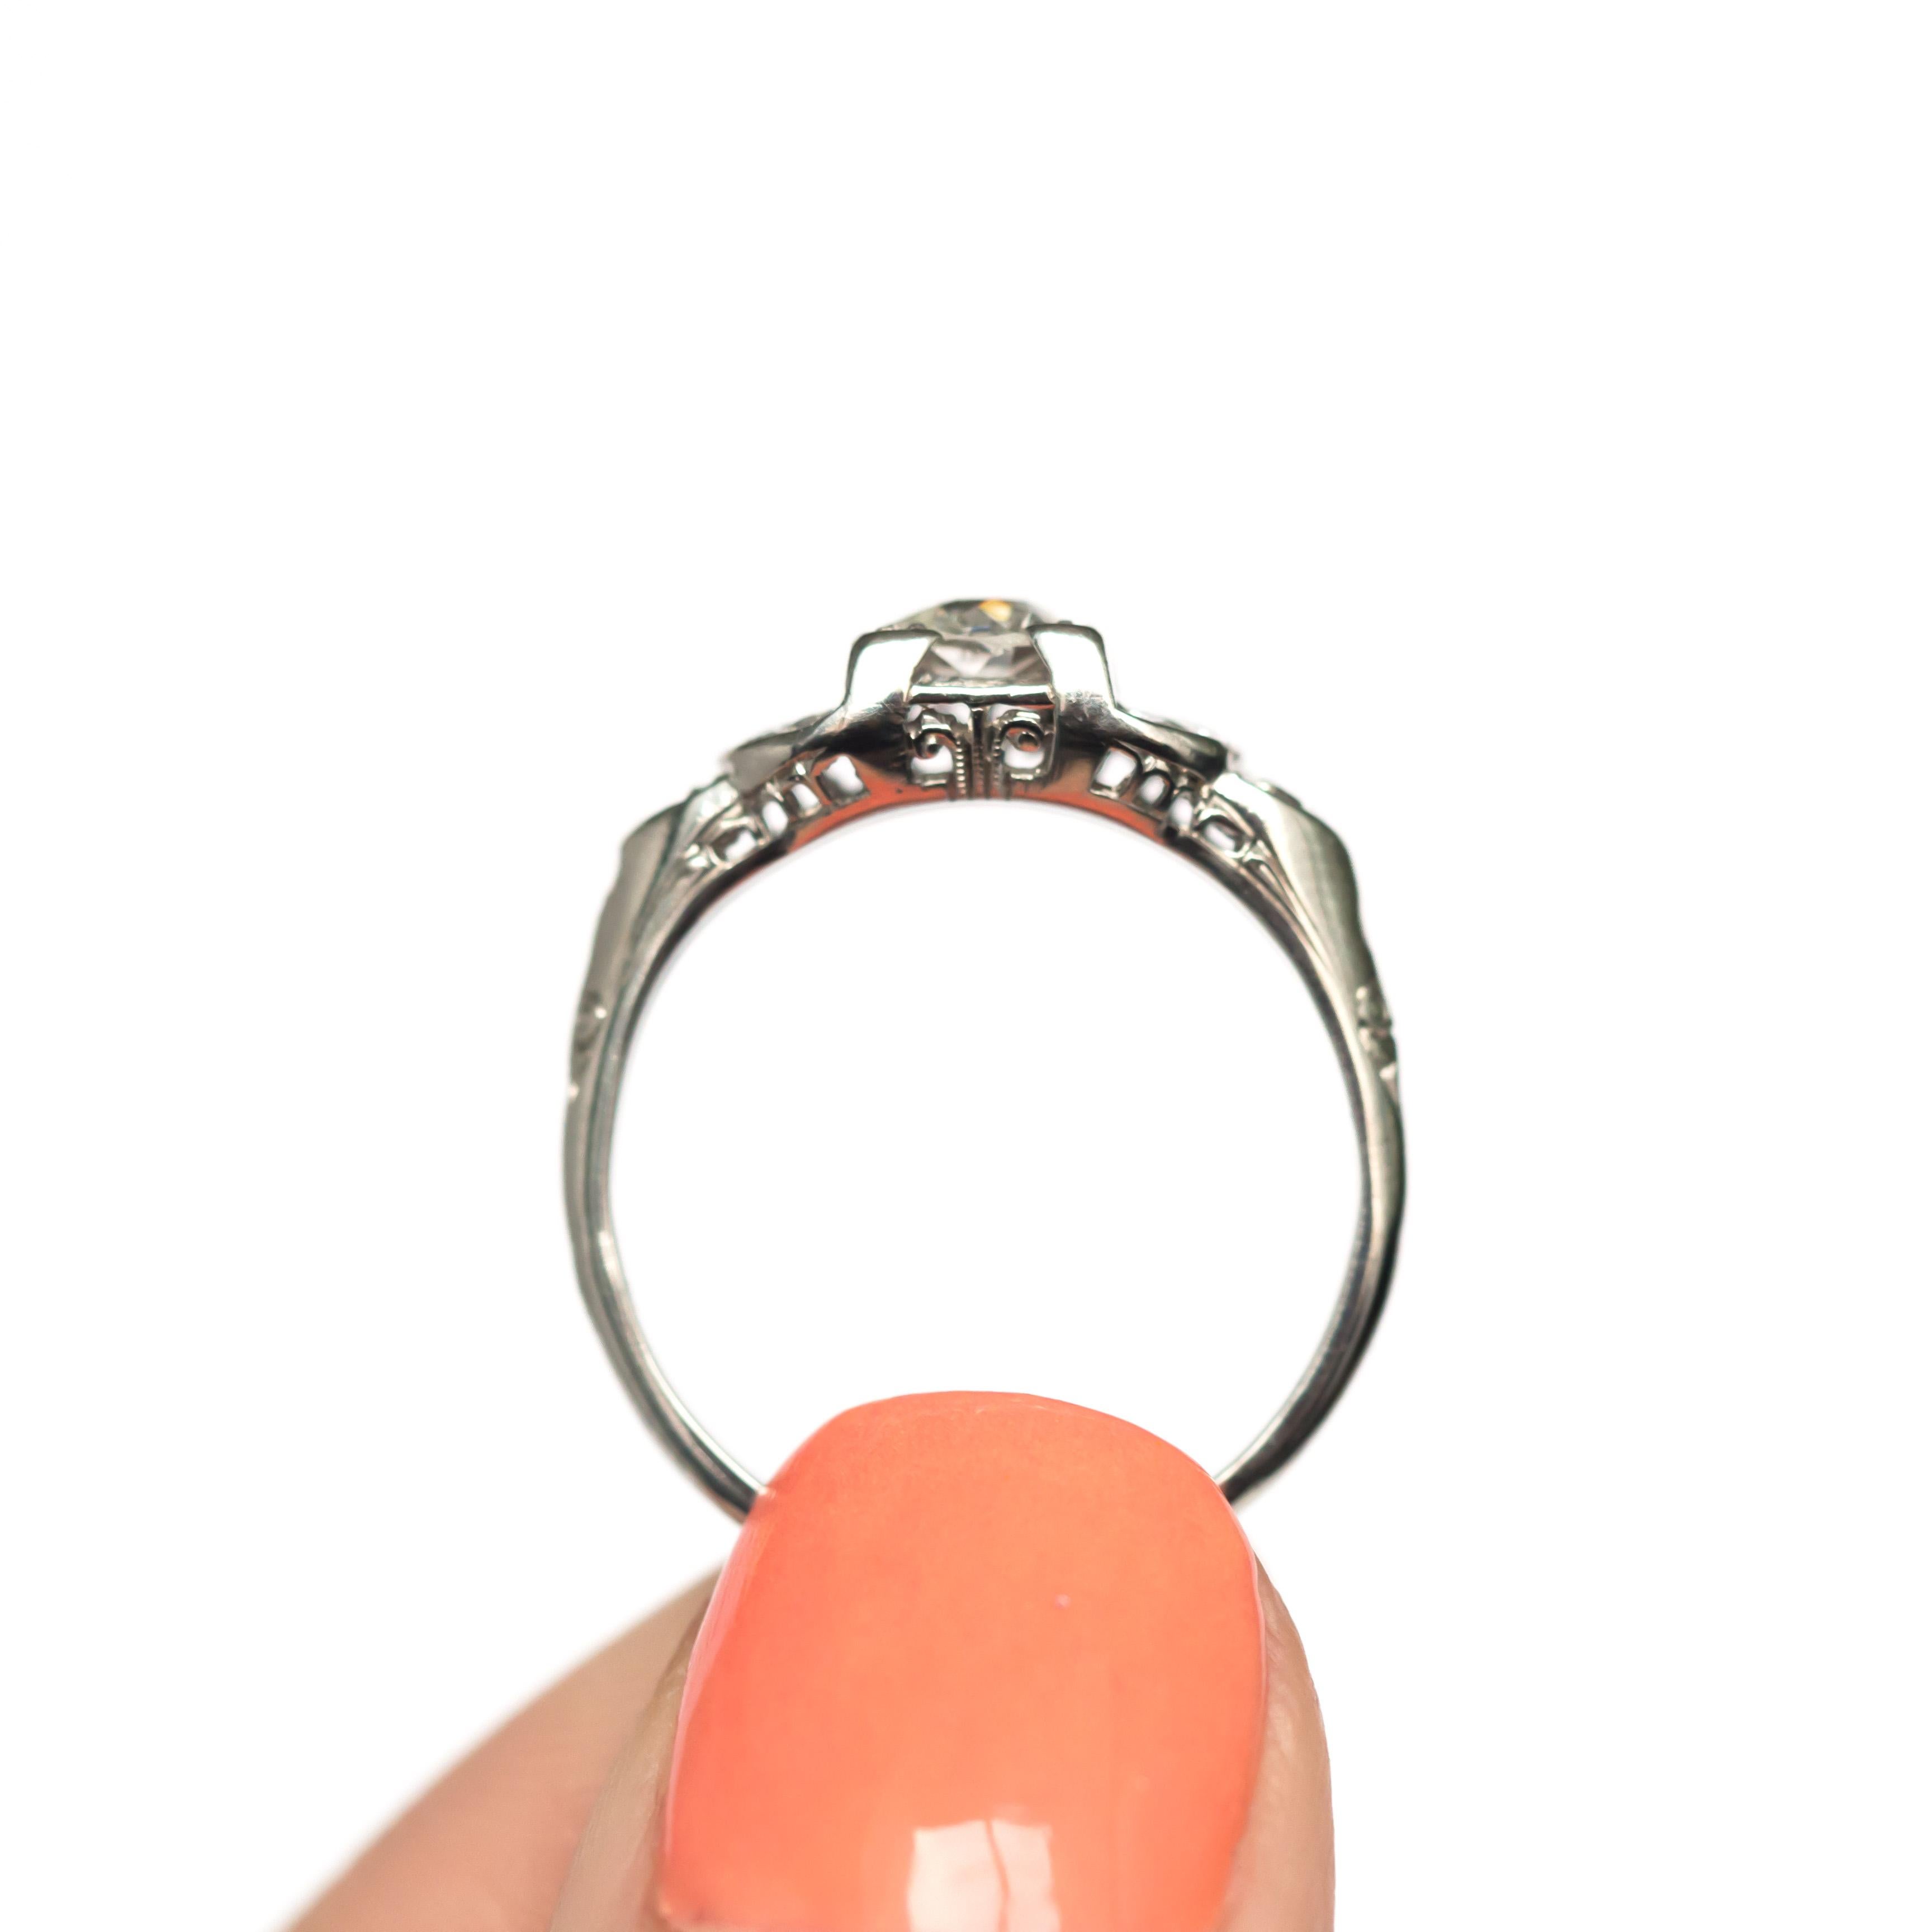 .35 carat diamond ring